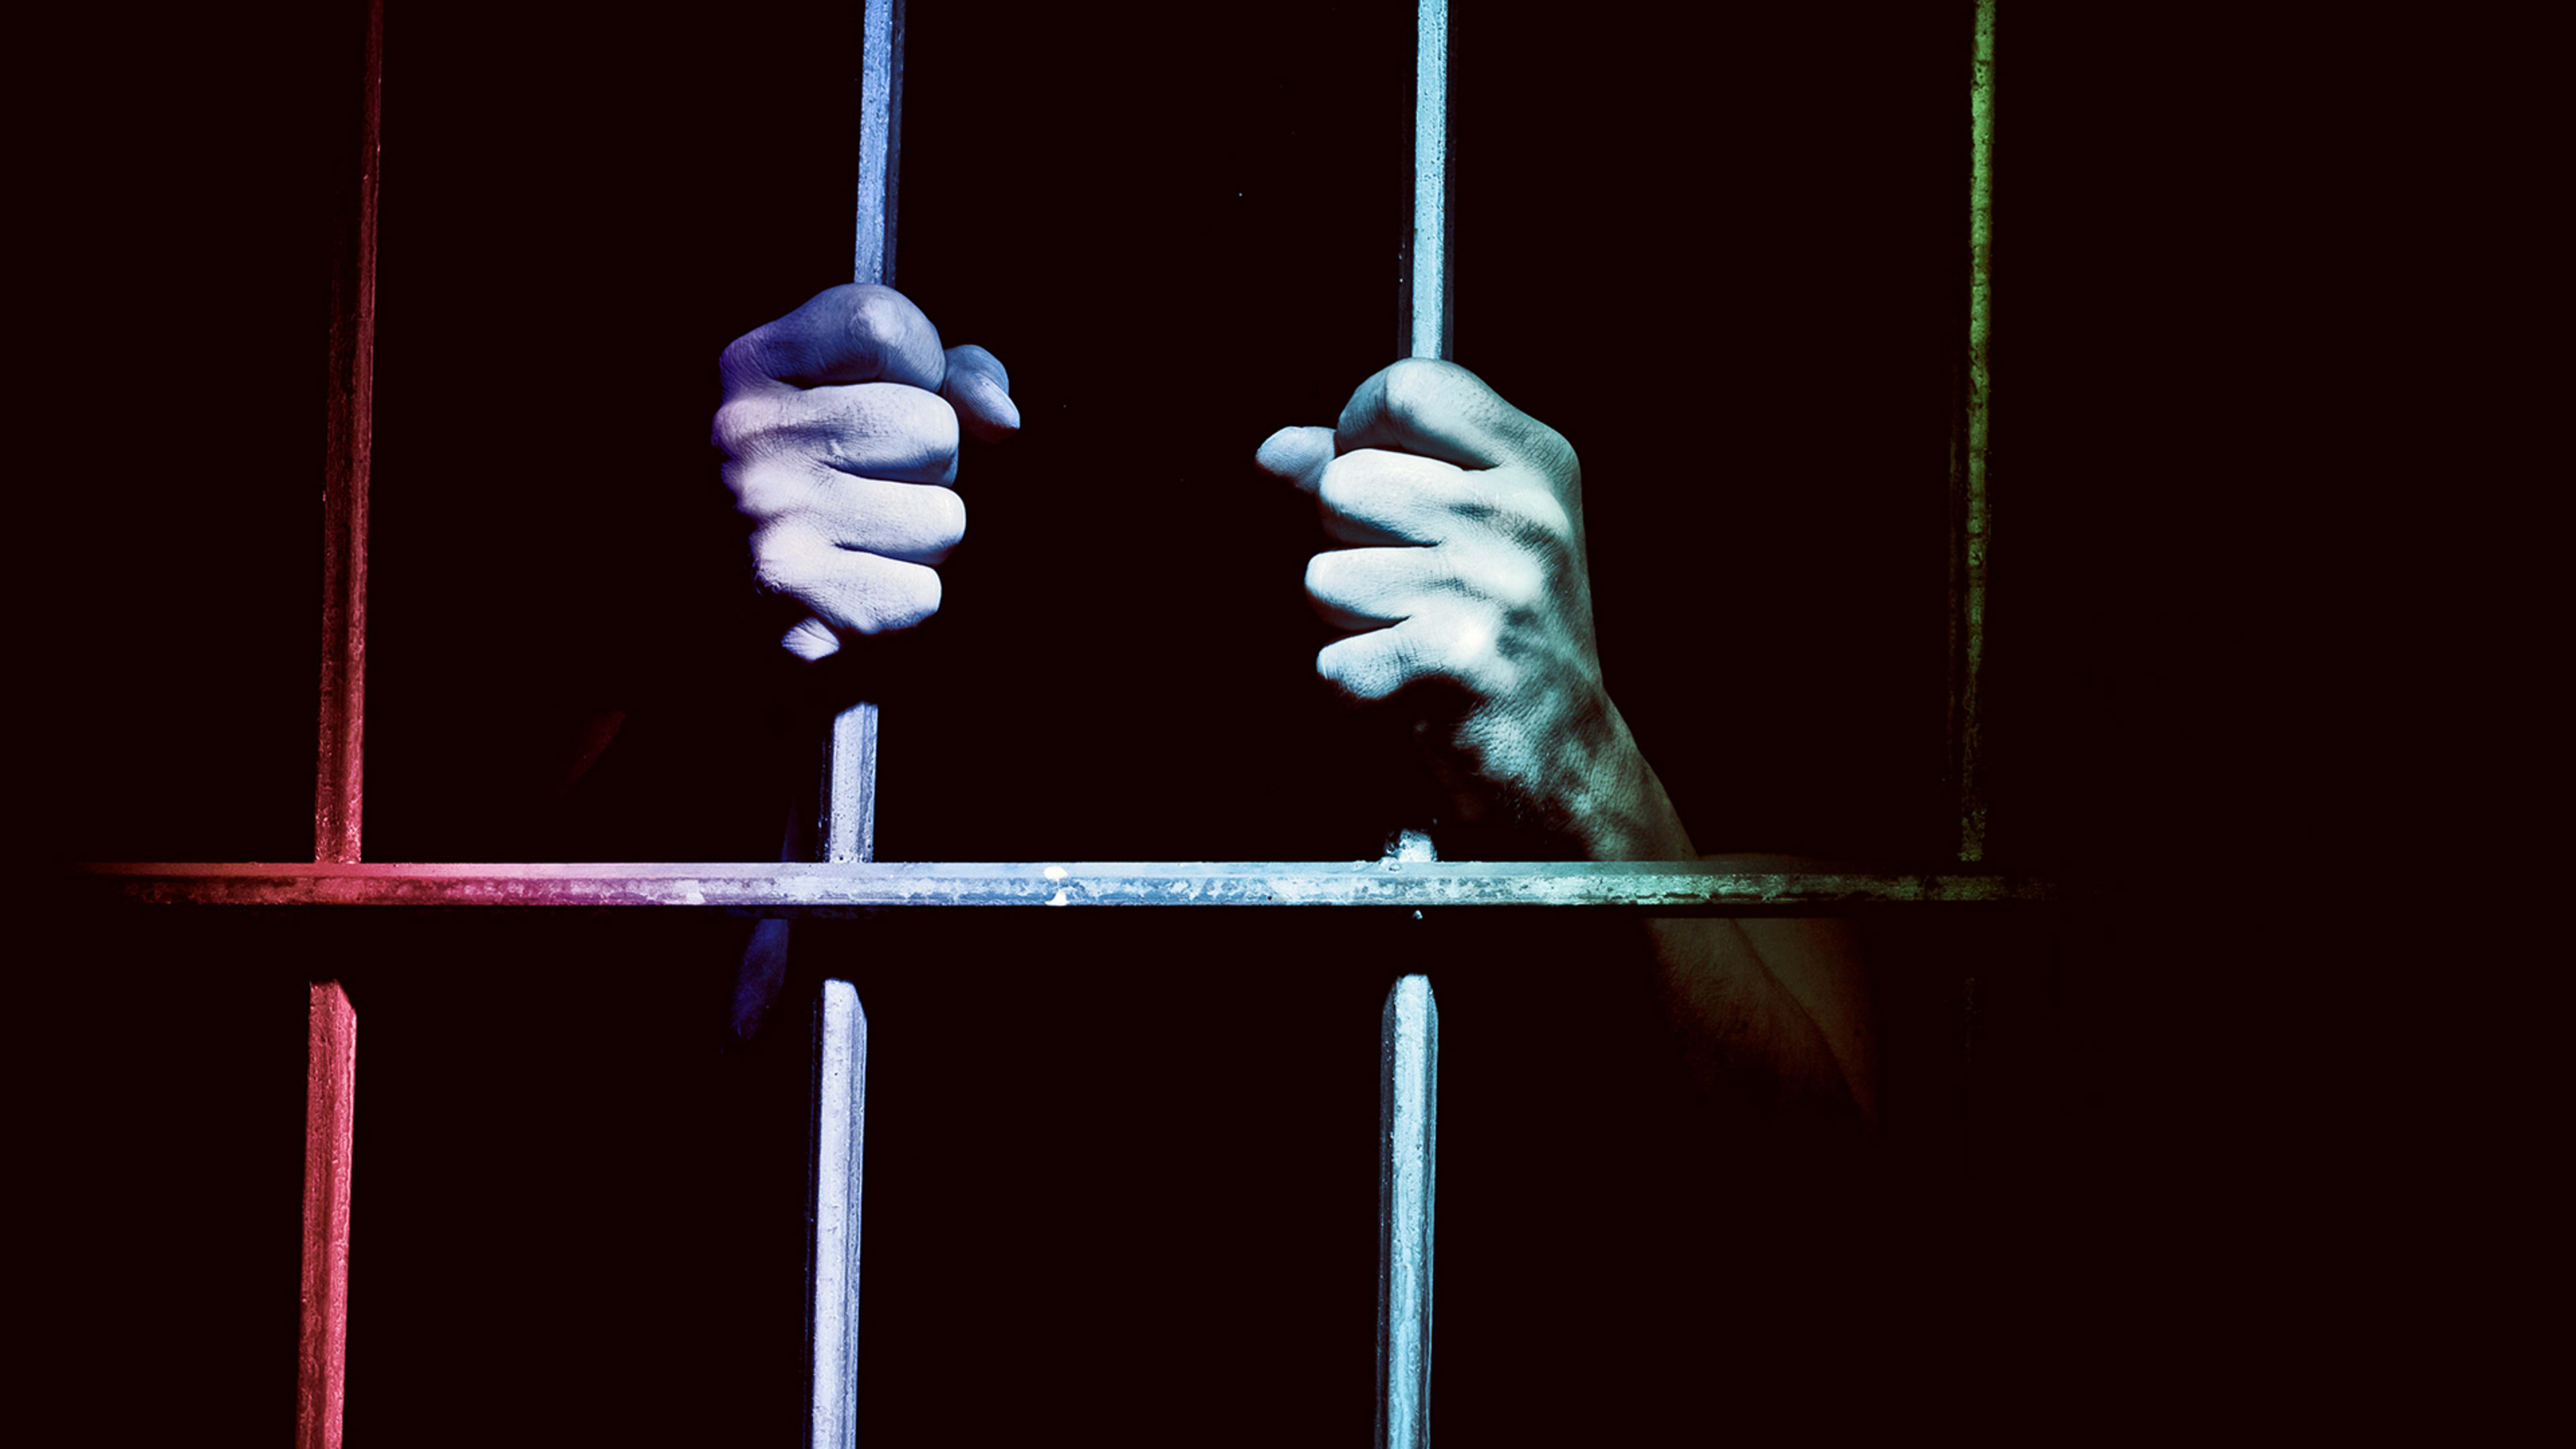 Google+ Invite Lands Man In Jail